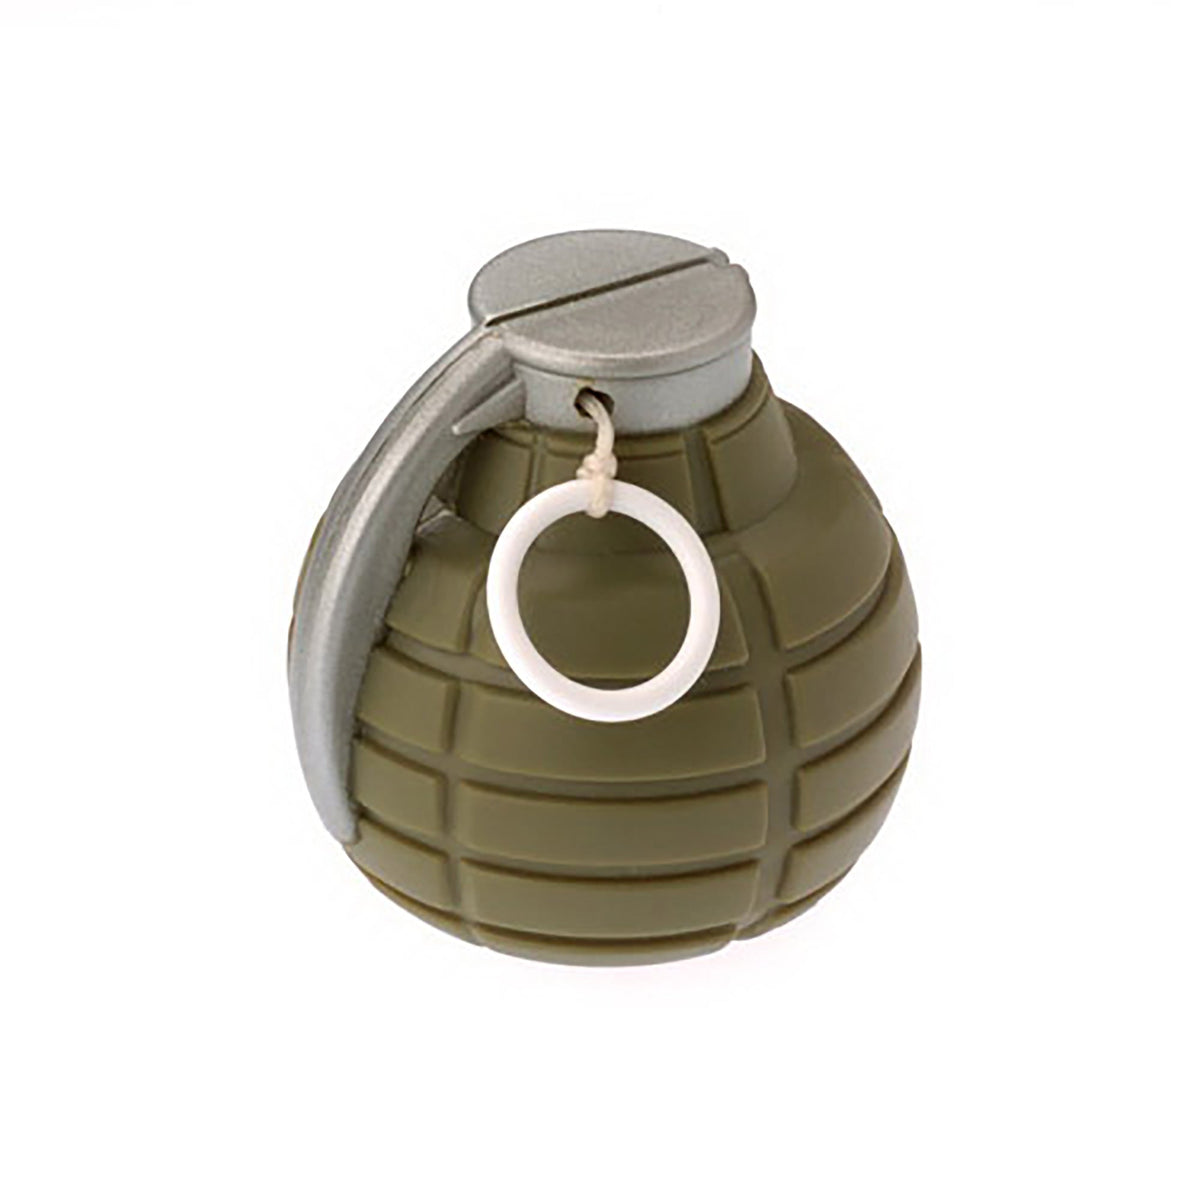 U.S. TOYS impulse buying Vibrating Grenade, 1 Count 49392256015